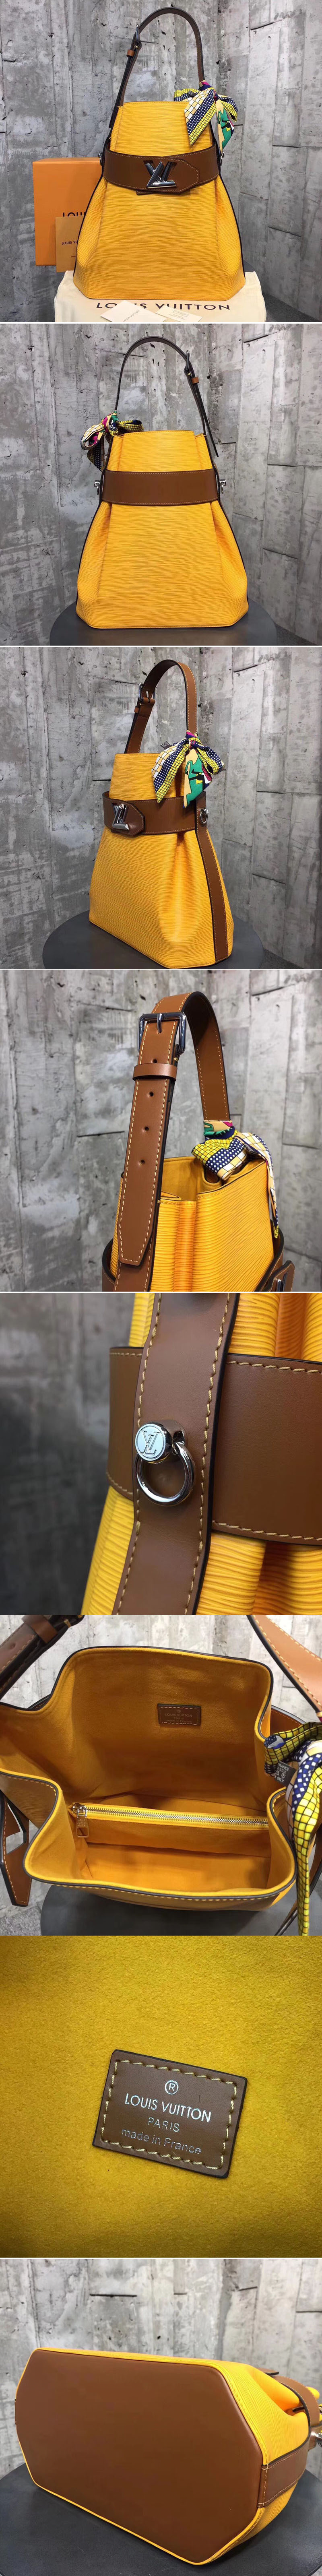 Replica Louis Vuitton M55188 Epi Leather Bucket Bag Yellow